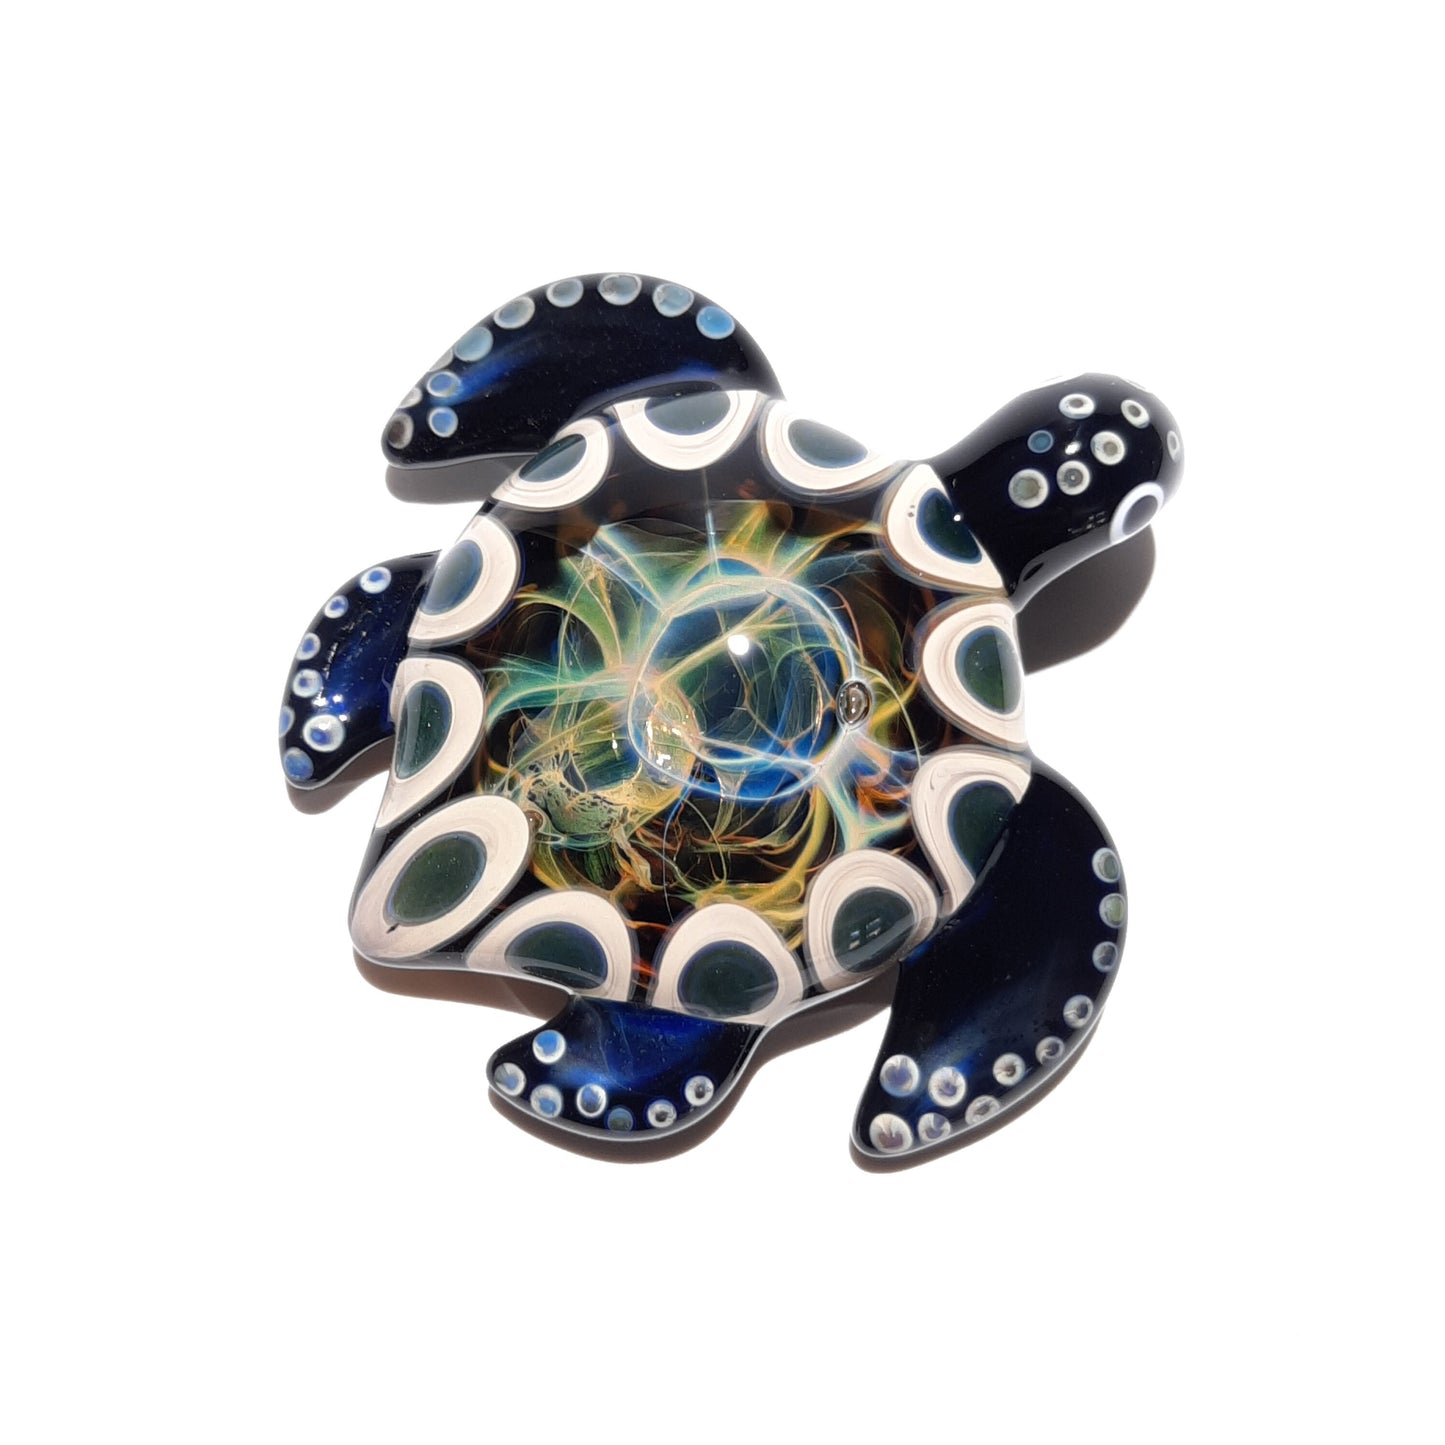 Blown Glass Turtle - Earthy Turtle Pendant - Glass Art - Sea Turtle - Handmade - Unique Jewelry - Cute - Turtle Necklace - Great Gift Ideas